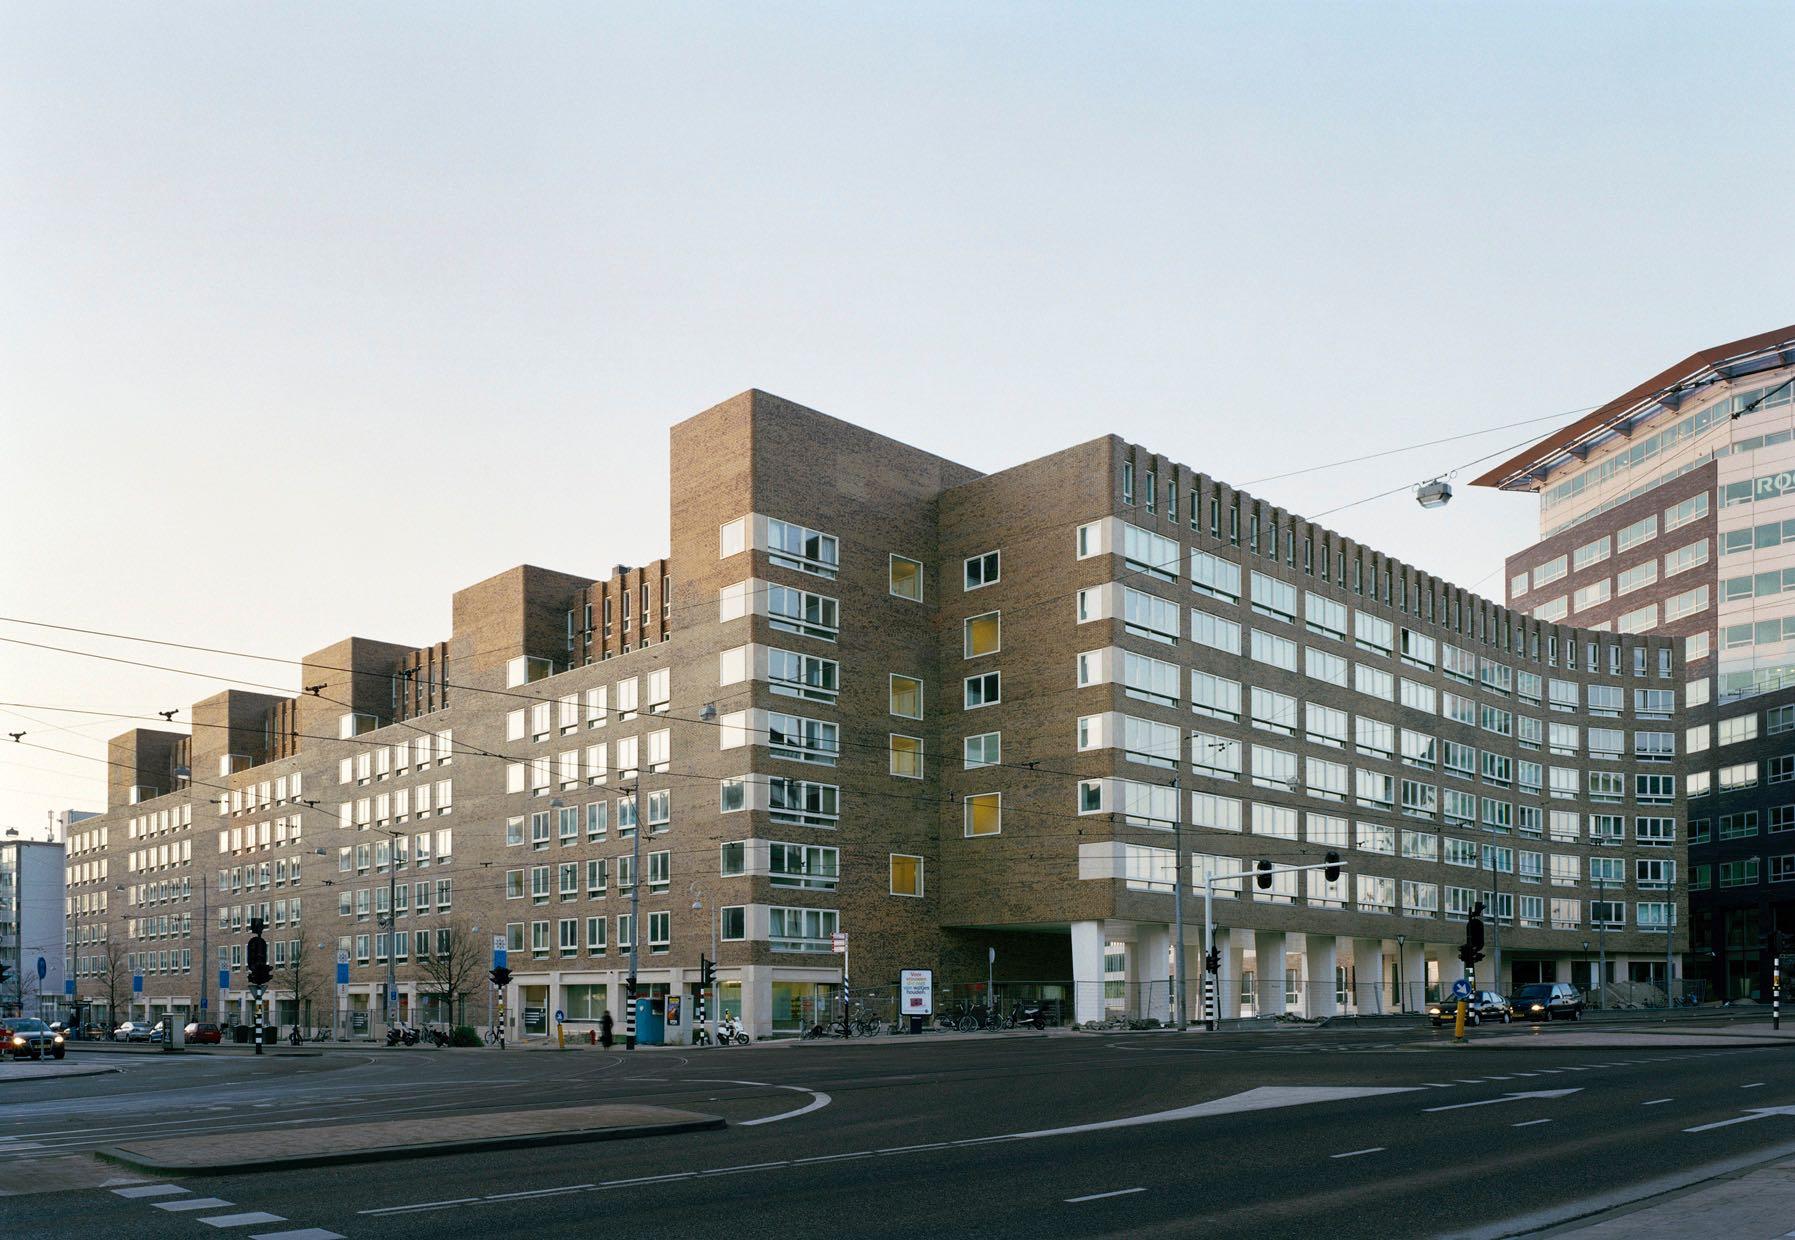 Appartementen Bos en Lommer, Amsterdam - Geurst & Schulze Architecten 1a